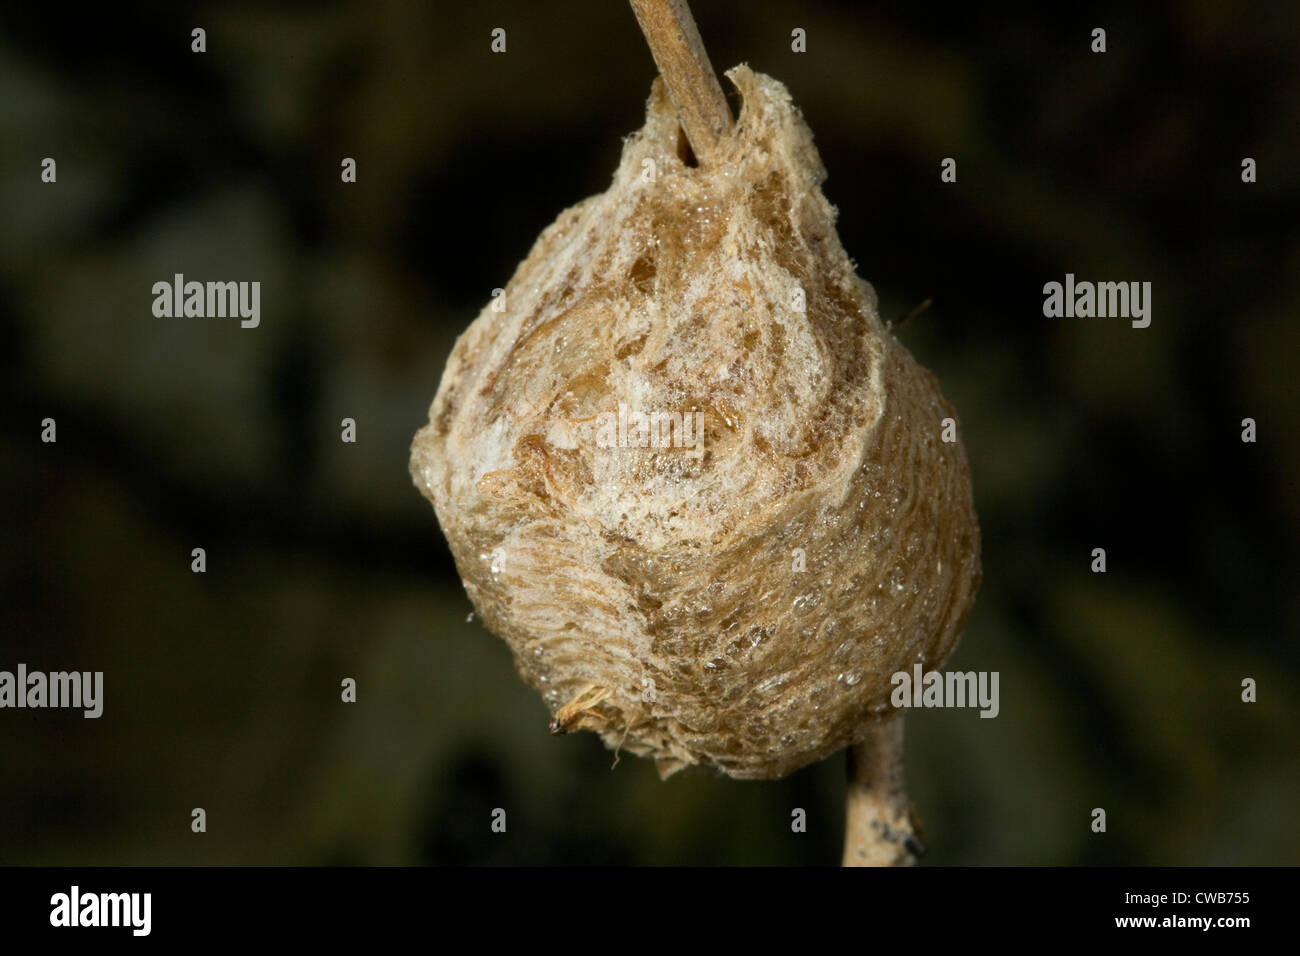 The egg sac of a praying mantis, Mantis religiosa  Stock Photo